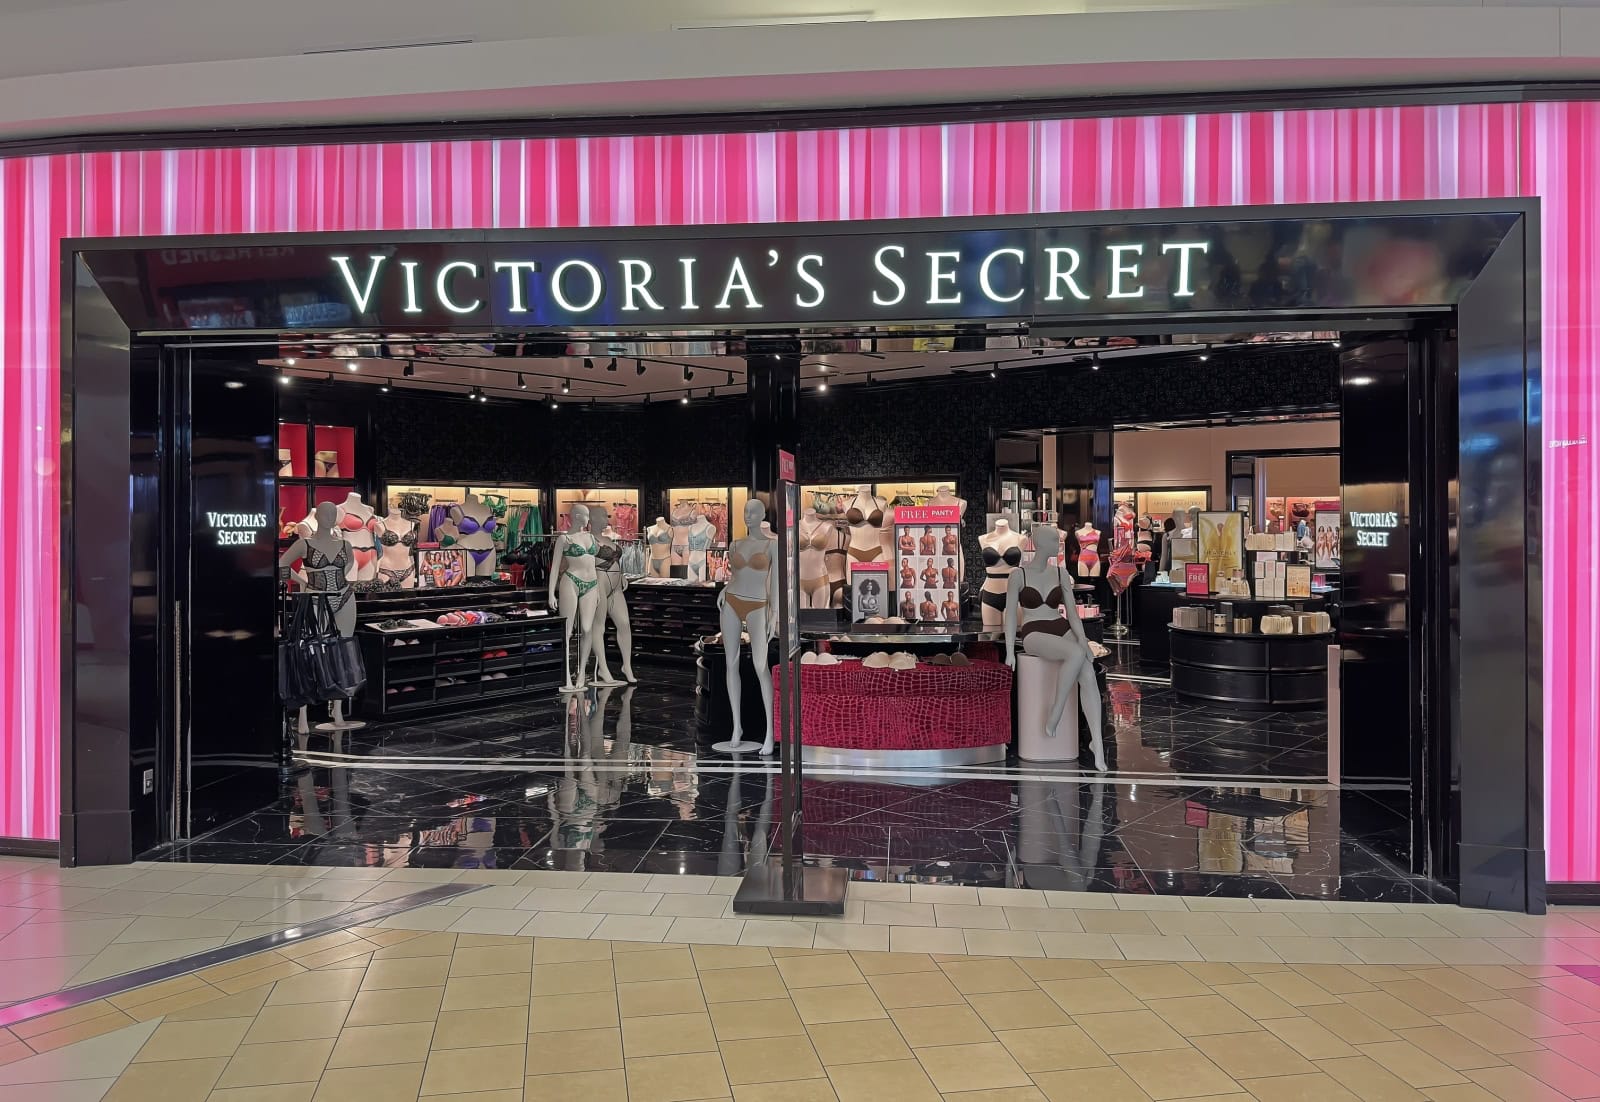 A Victoria's Secret lingerie storefront. Photo by QualityHD via Shutterstock.com